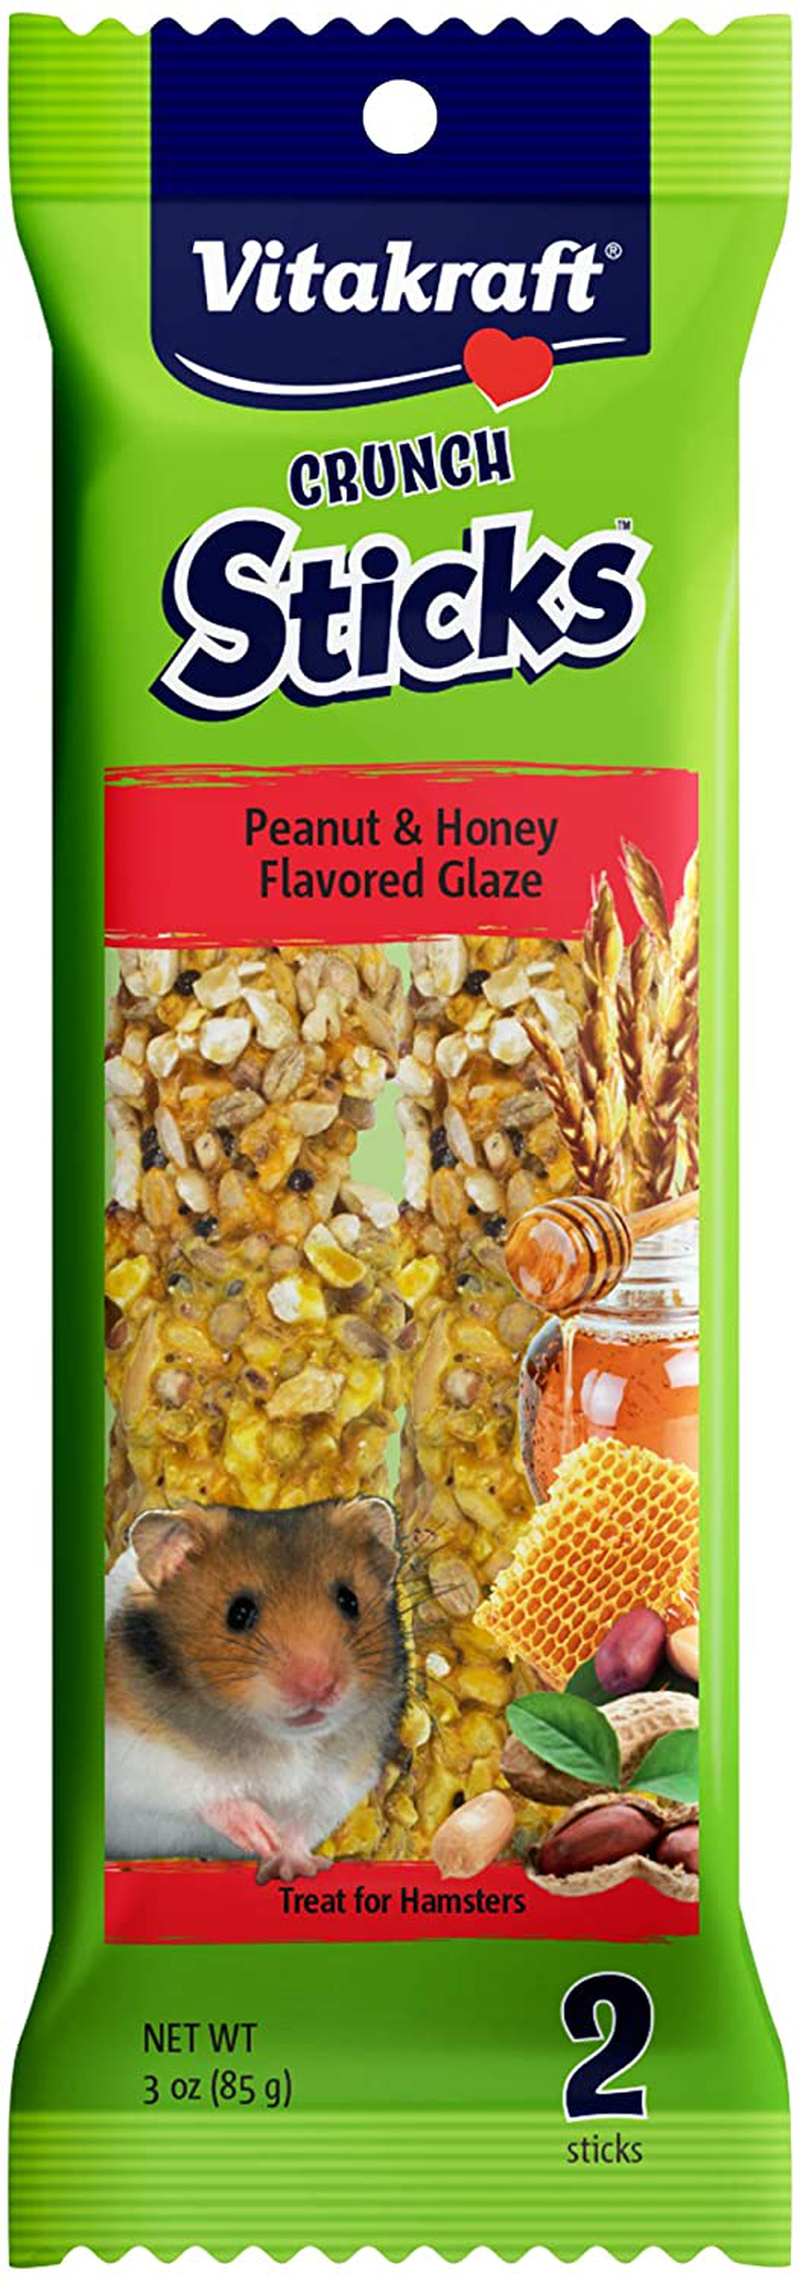 Vitakraft Crunch Sticks Peanut & Honey Flavored Glazed Hamster Treat (2 Sticks), 3 Oz